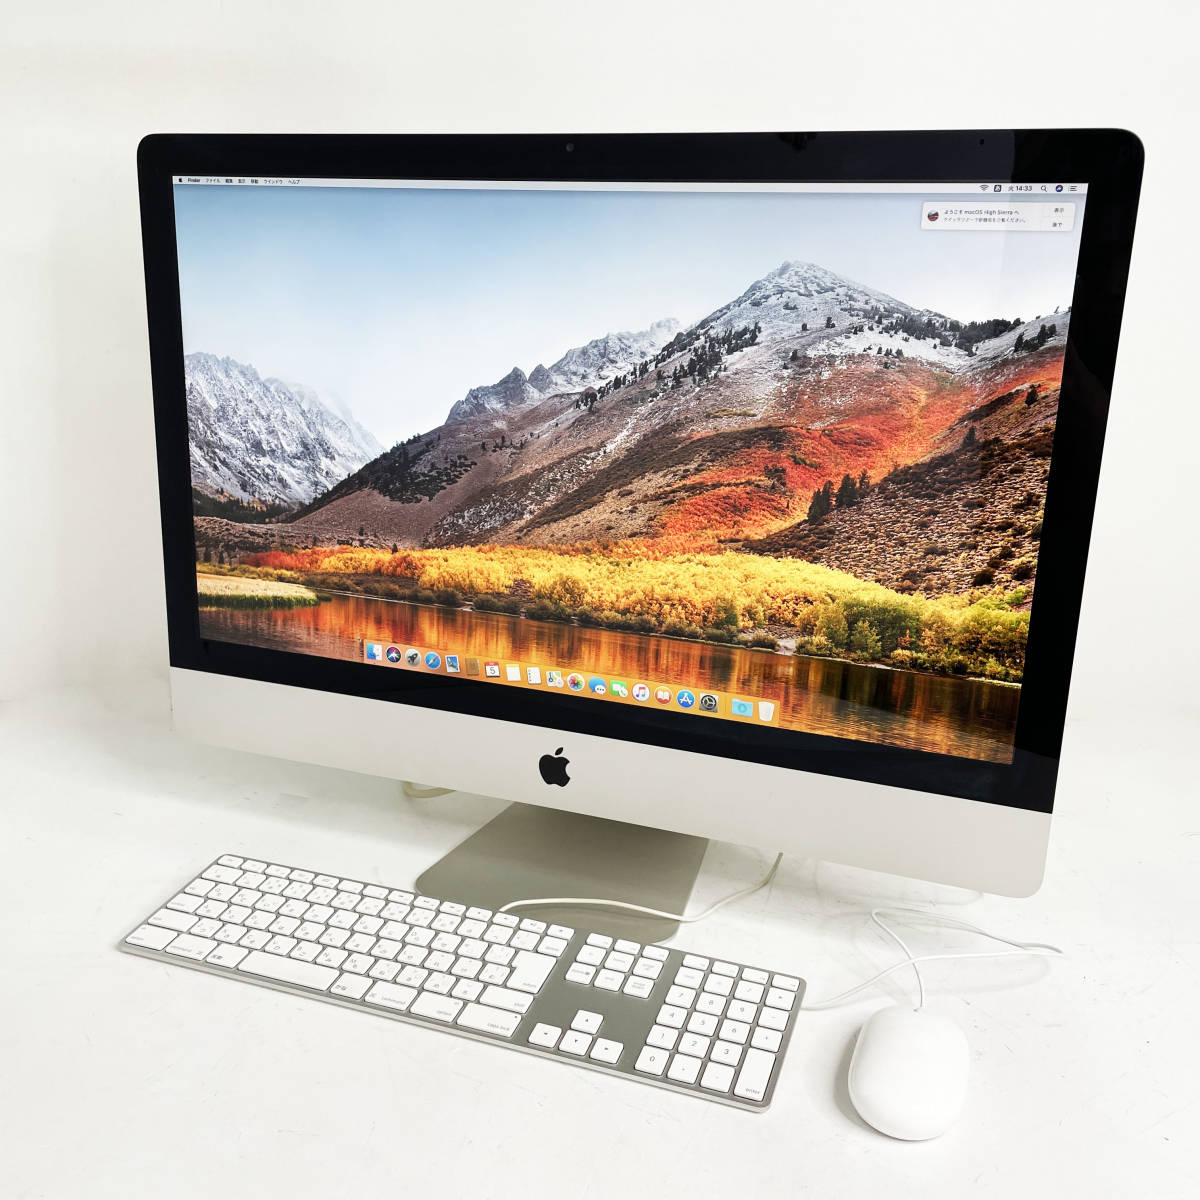 早い者勝ち】【即日発送可能】【極上美品】Apple iMac A1418 Core i5 